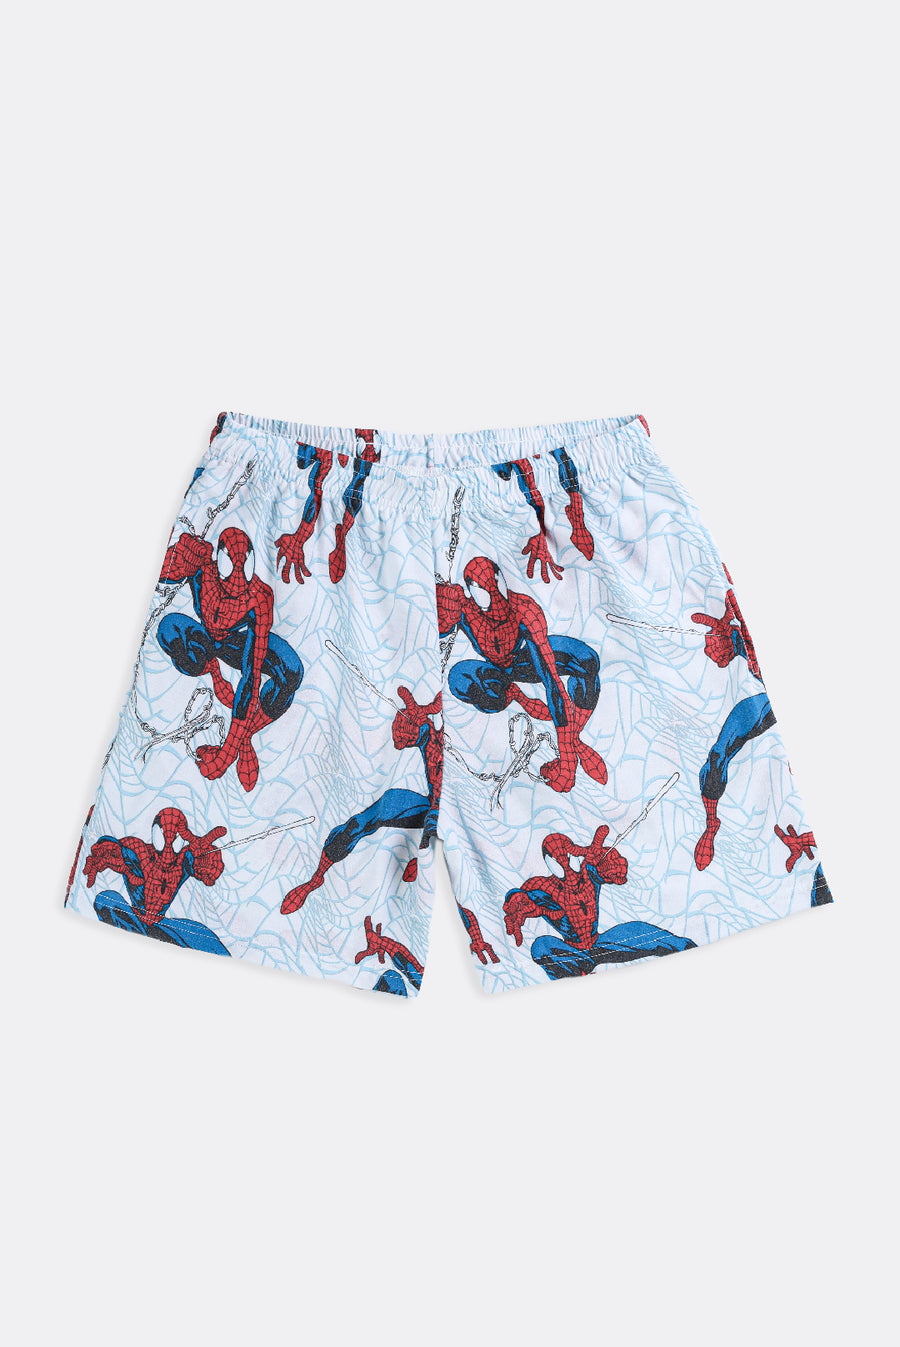 Unisex Rework Spiderman Boxer Shorts - S, L